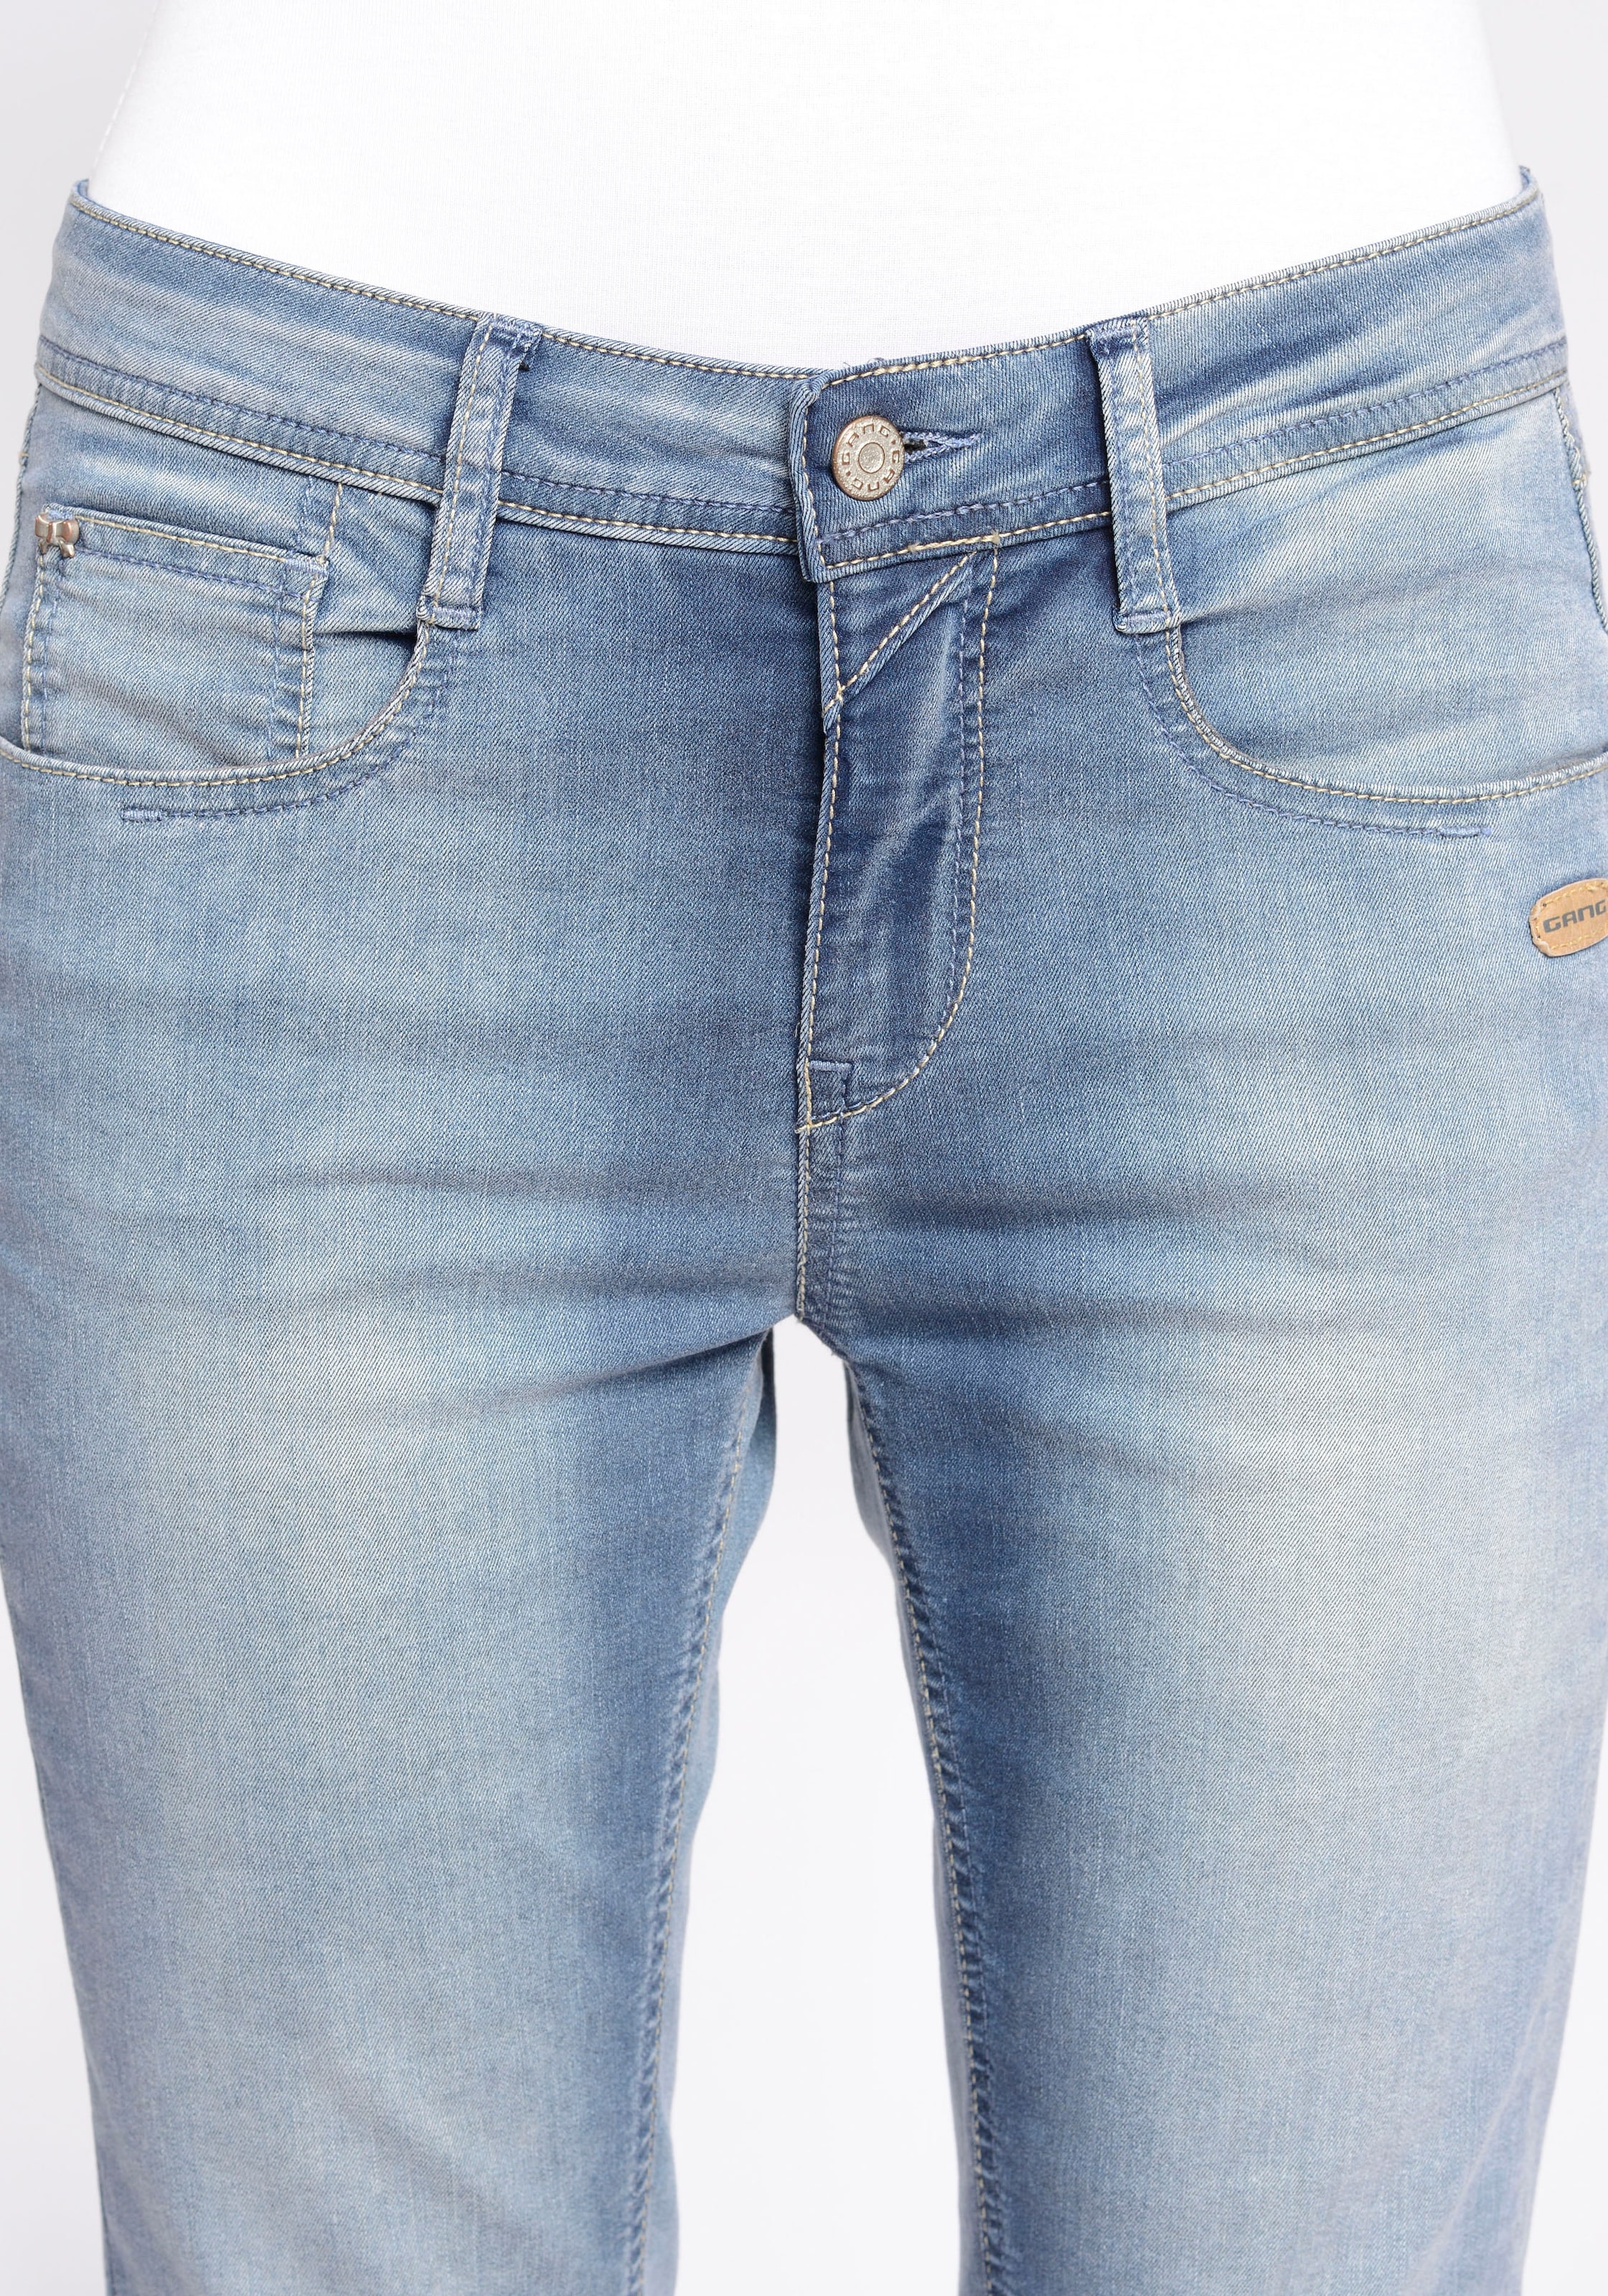 GANG Relax-fit-Jeans »94Amelie«, in Used bestellen cooler Waschung BAUR für 